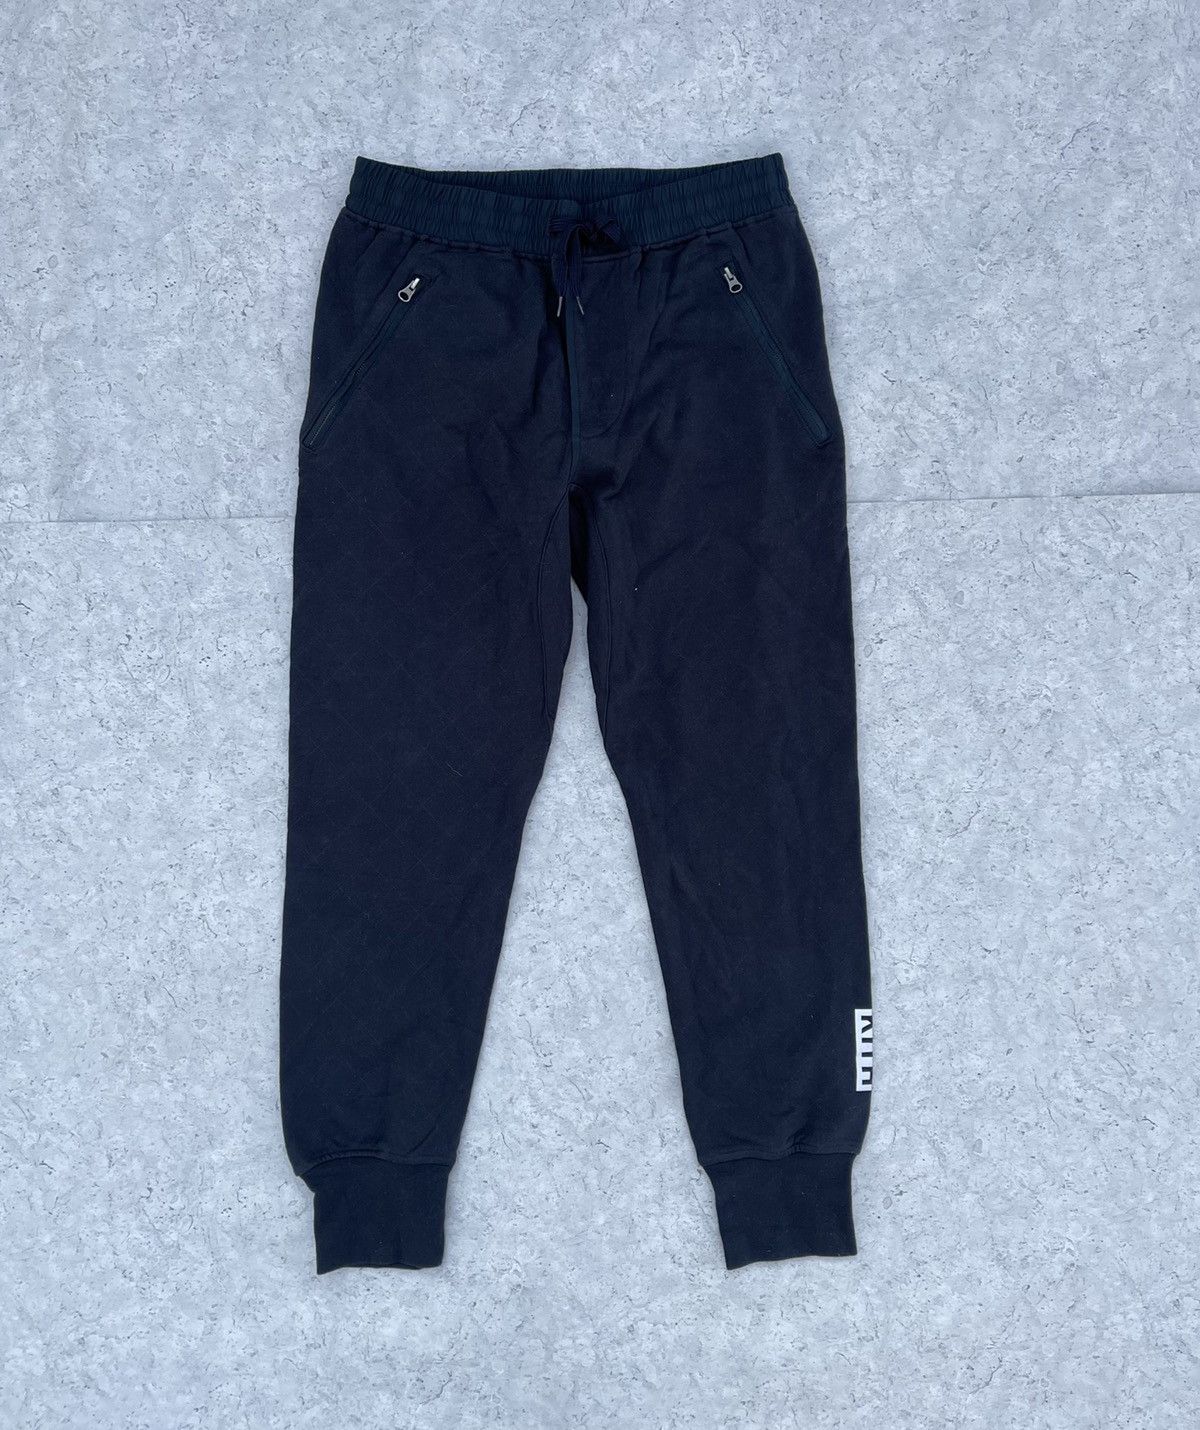 Kith NEW Kith Pants Sweatpants Box Logo Black | Grailed